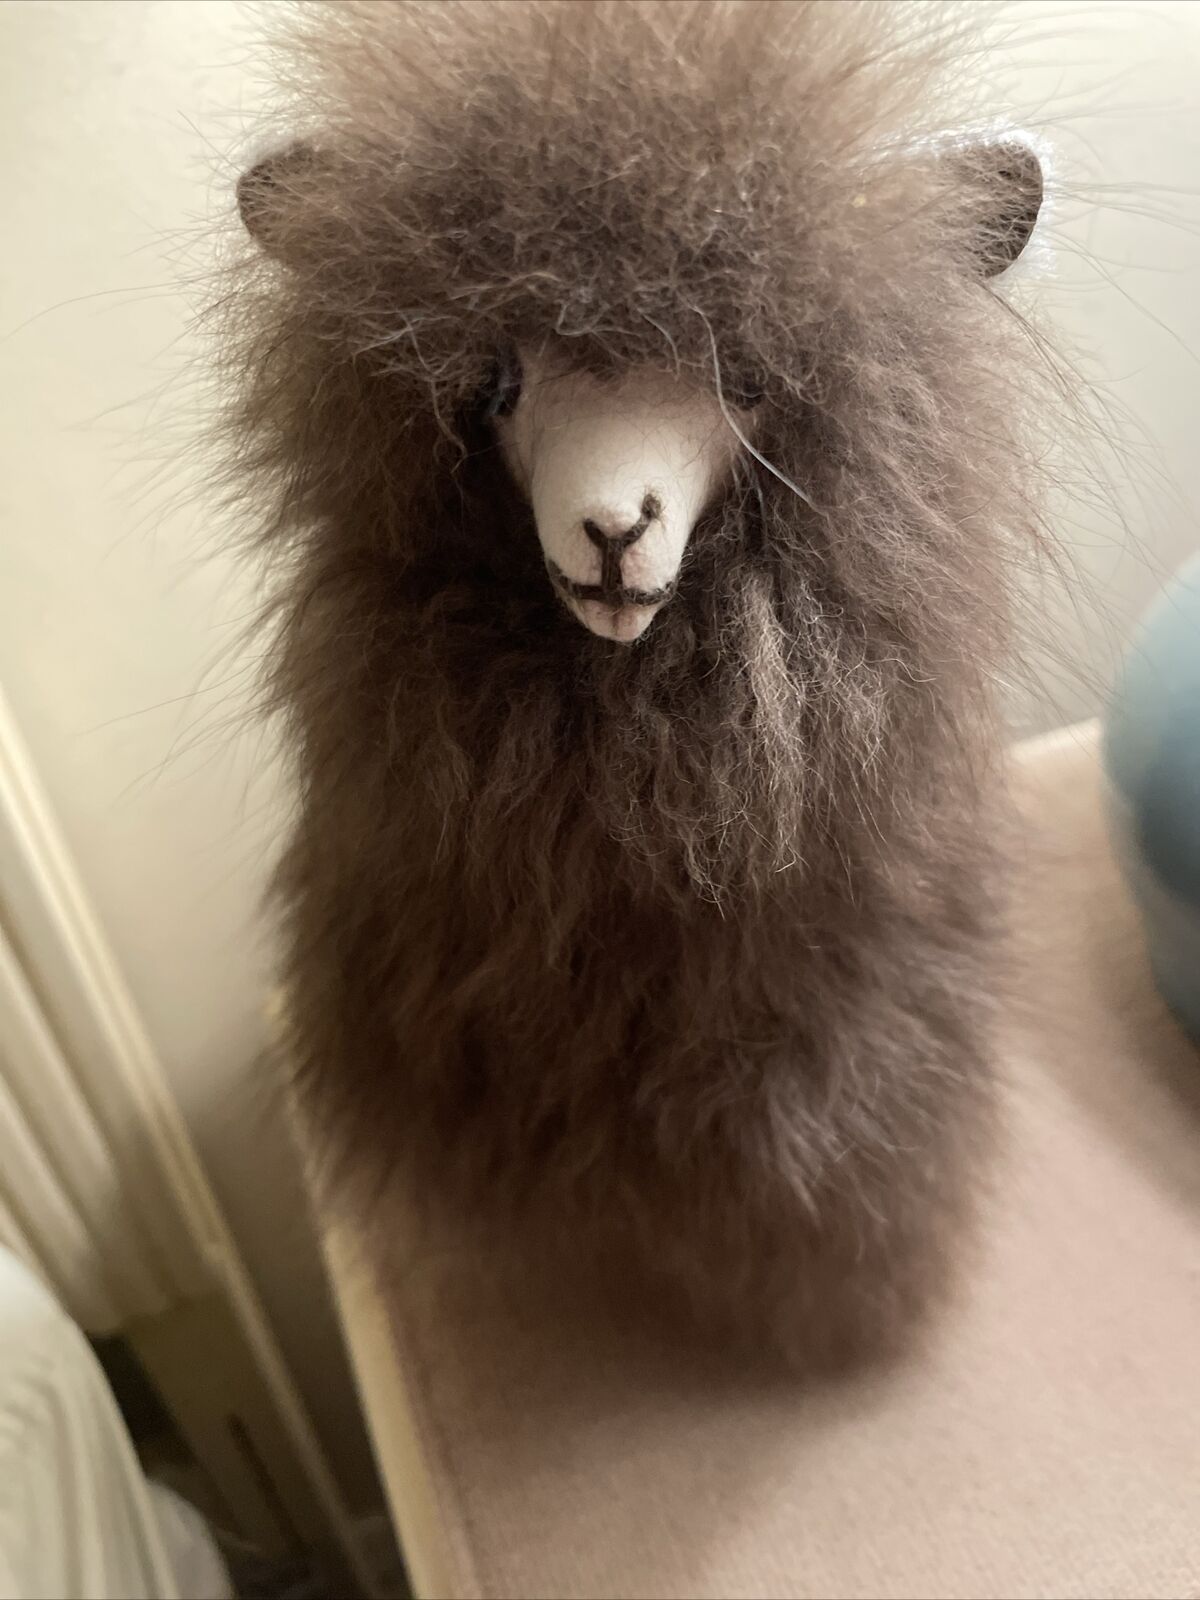 Peruvian Alpaca Llama Stuffed Animal - Handmade with Genuine Alpaca Fur - Brown